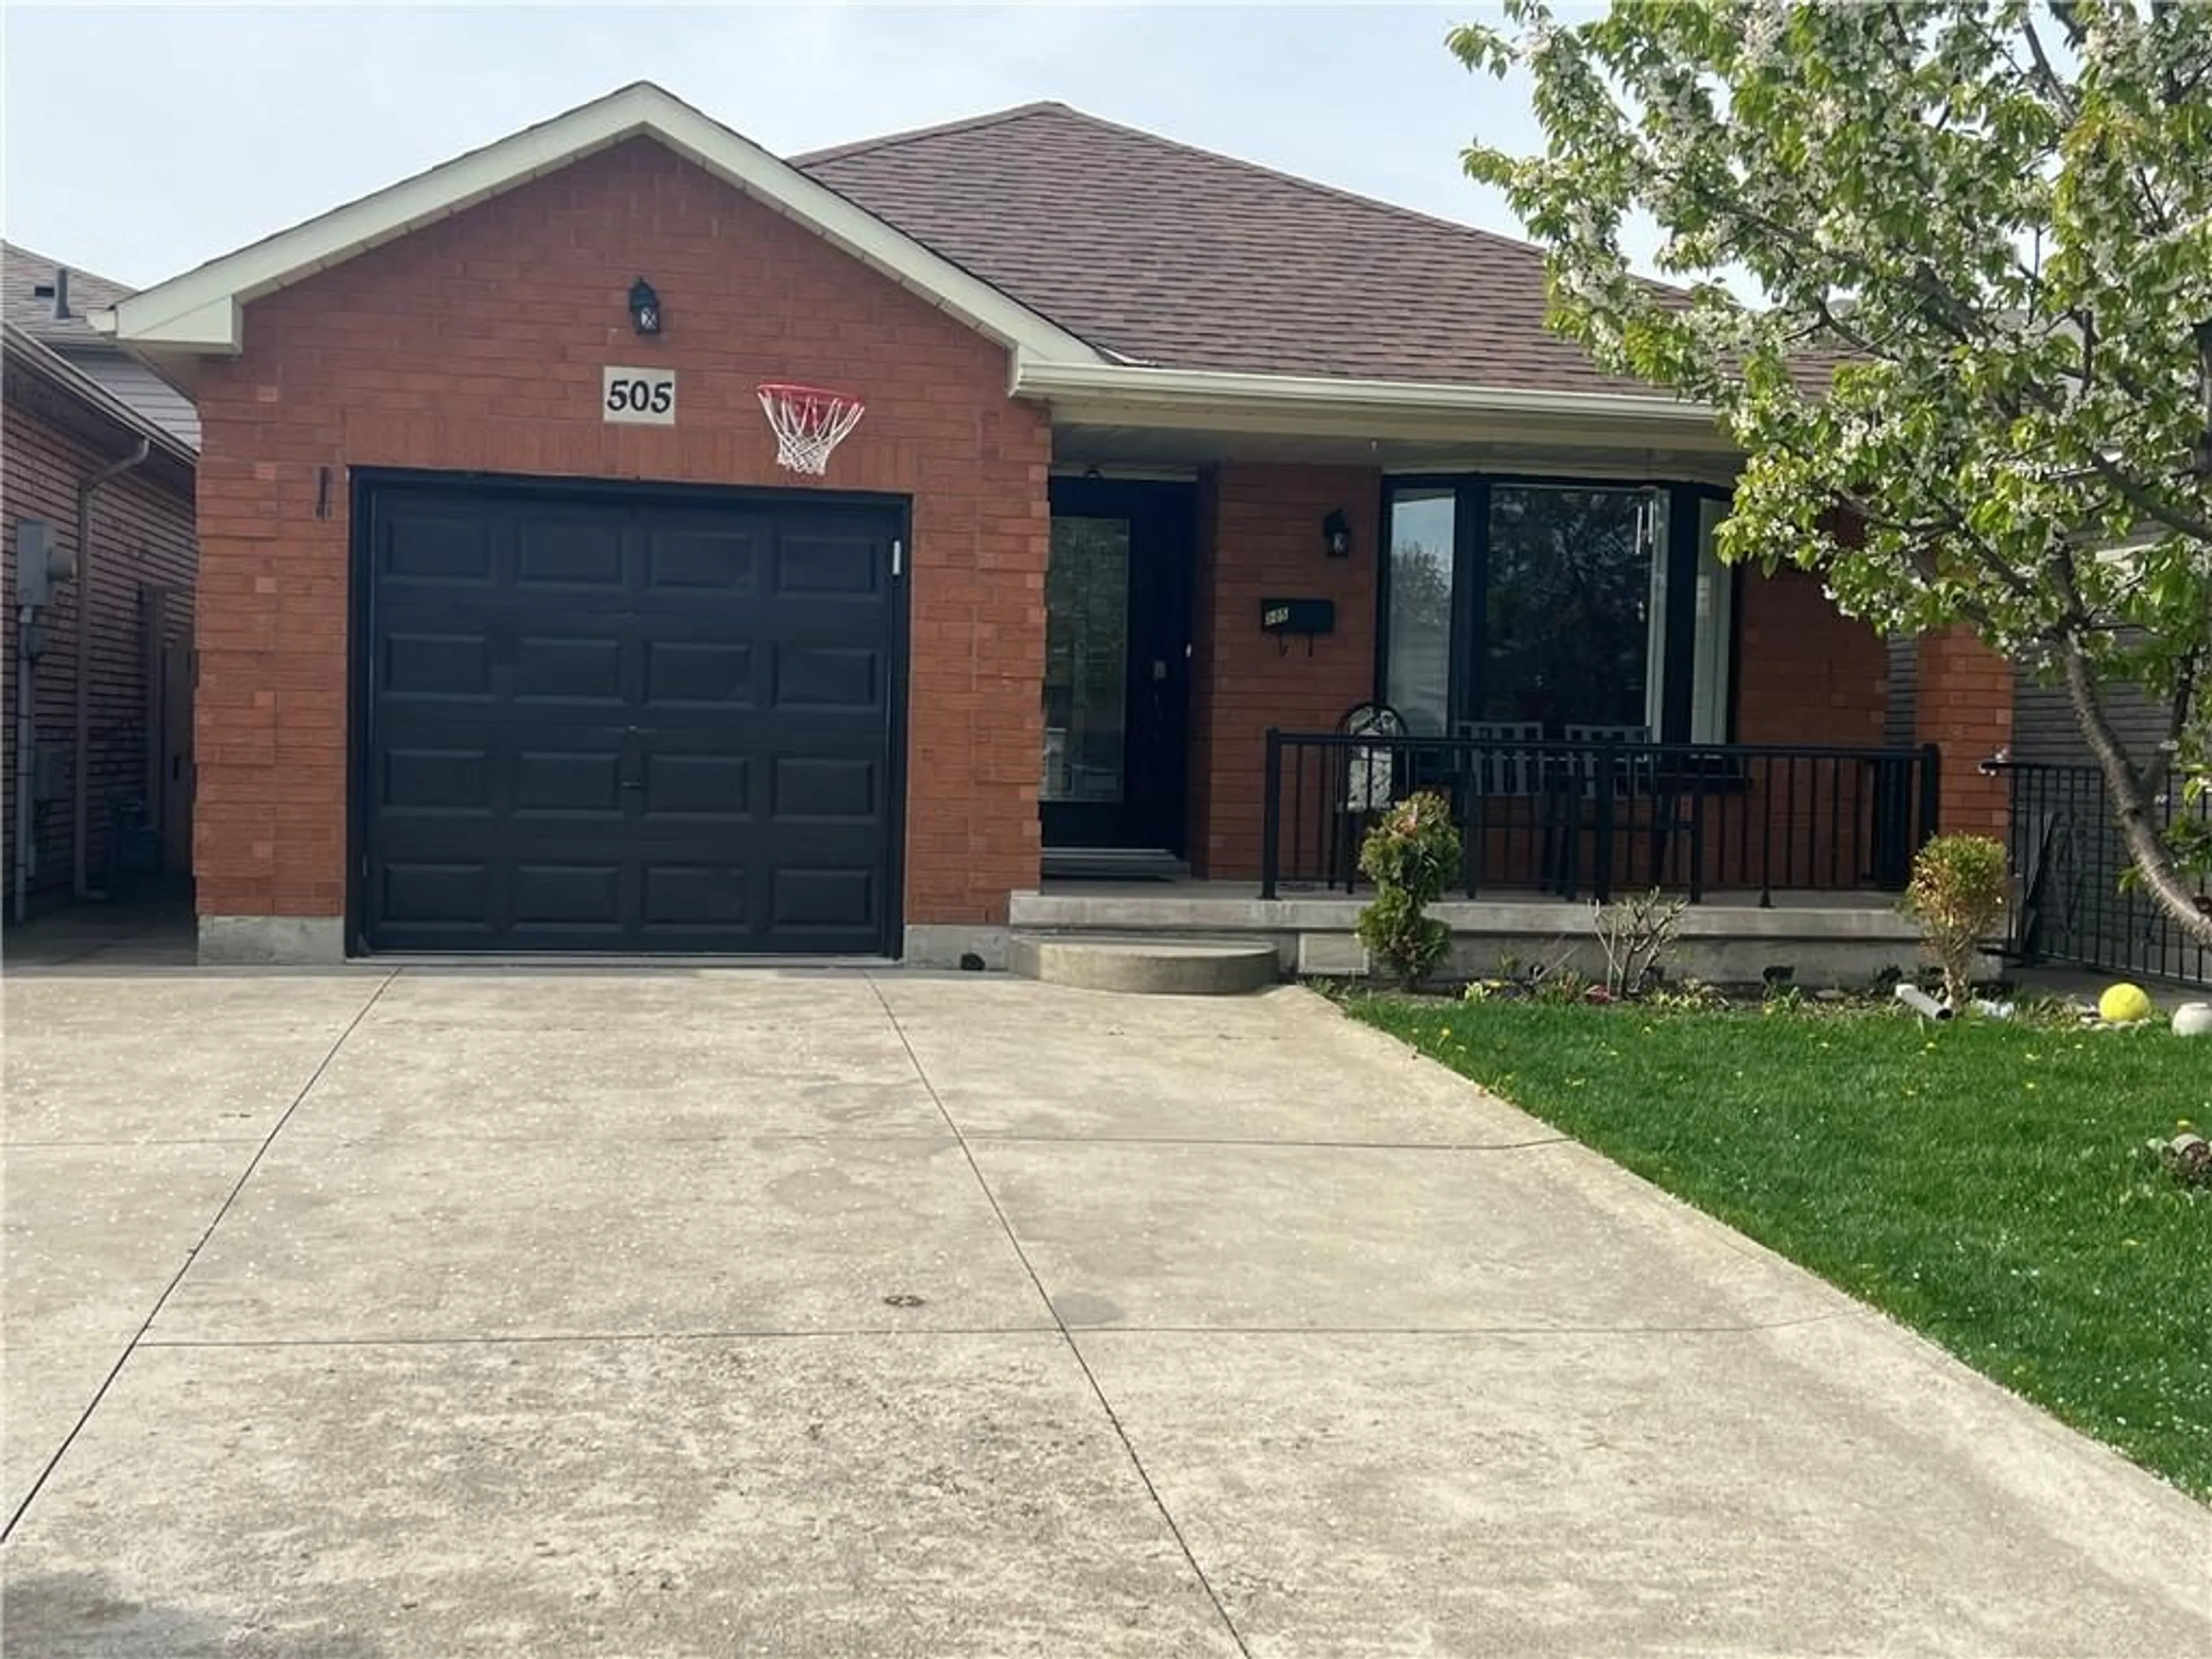 Home with brick exterior material for 505 Berkindale Dr, Hamilton Ontario L8E 5B7